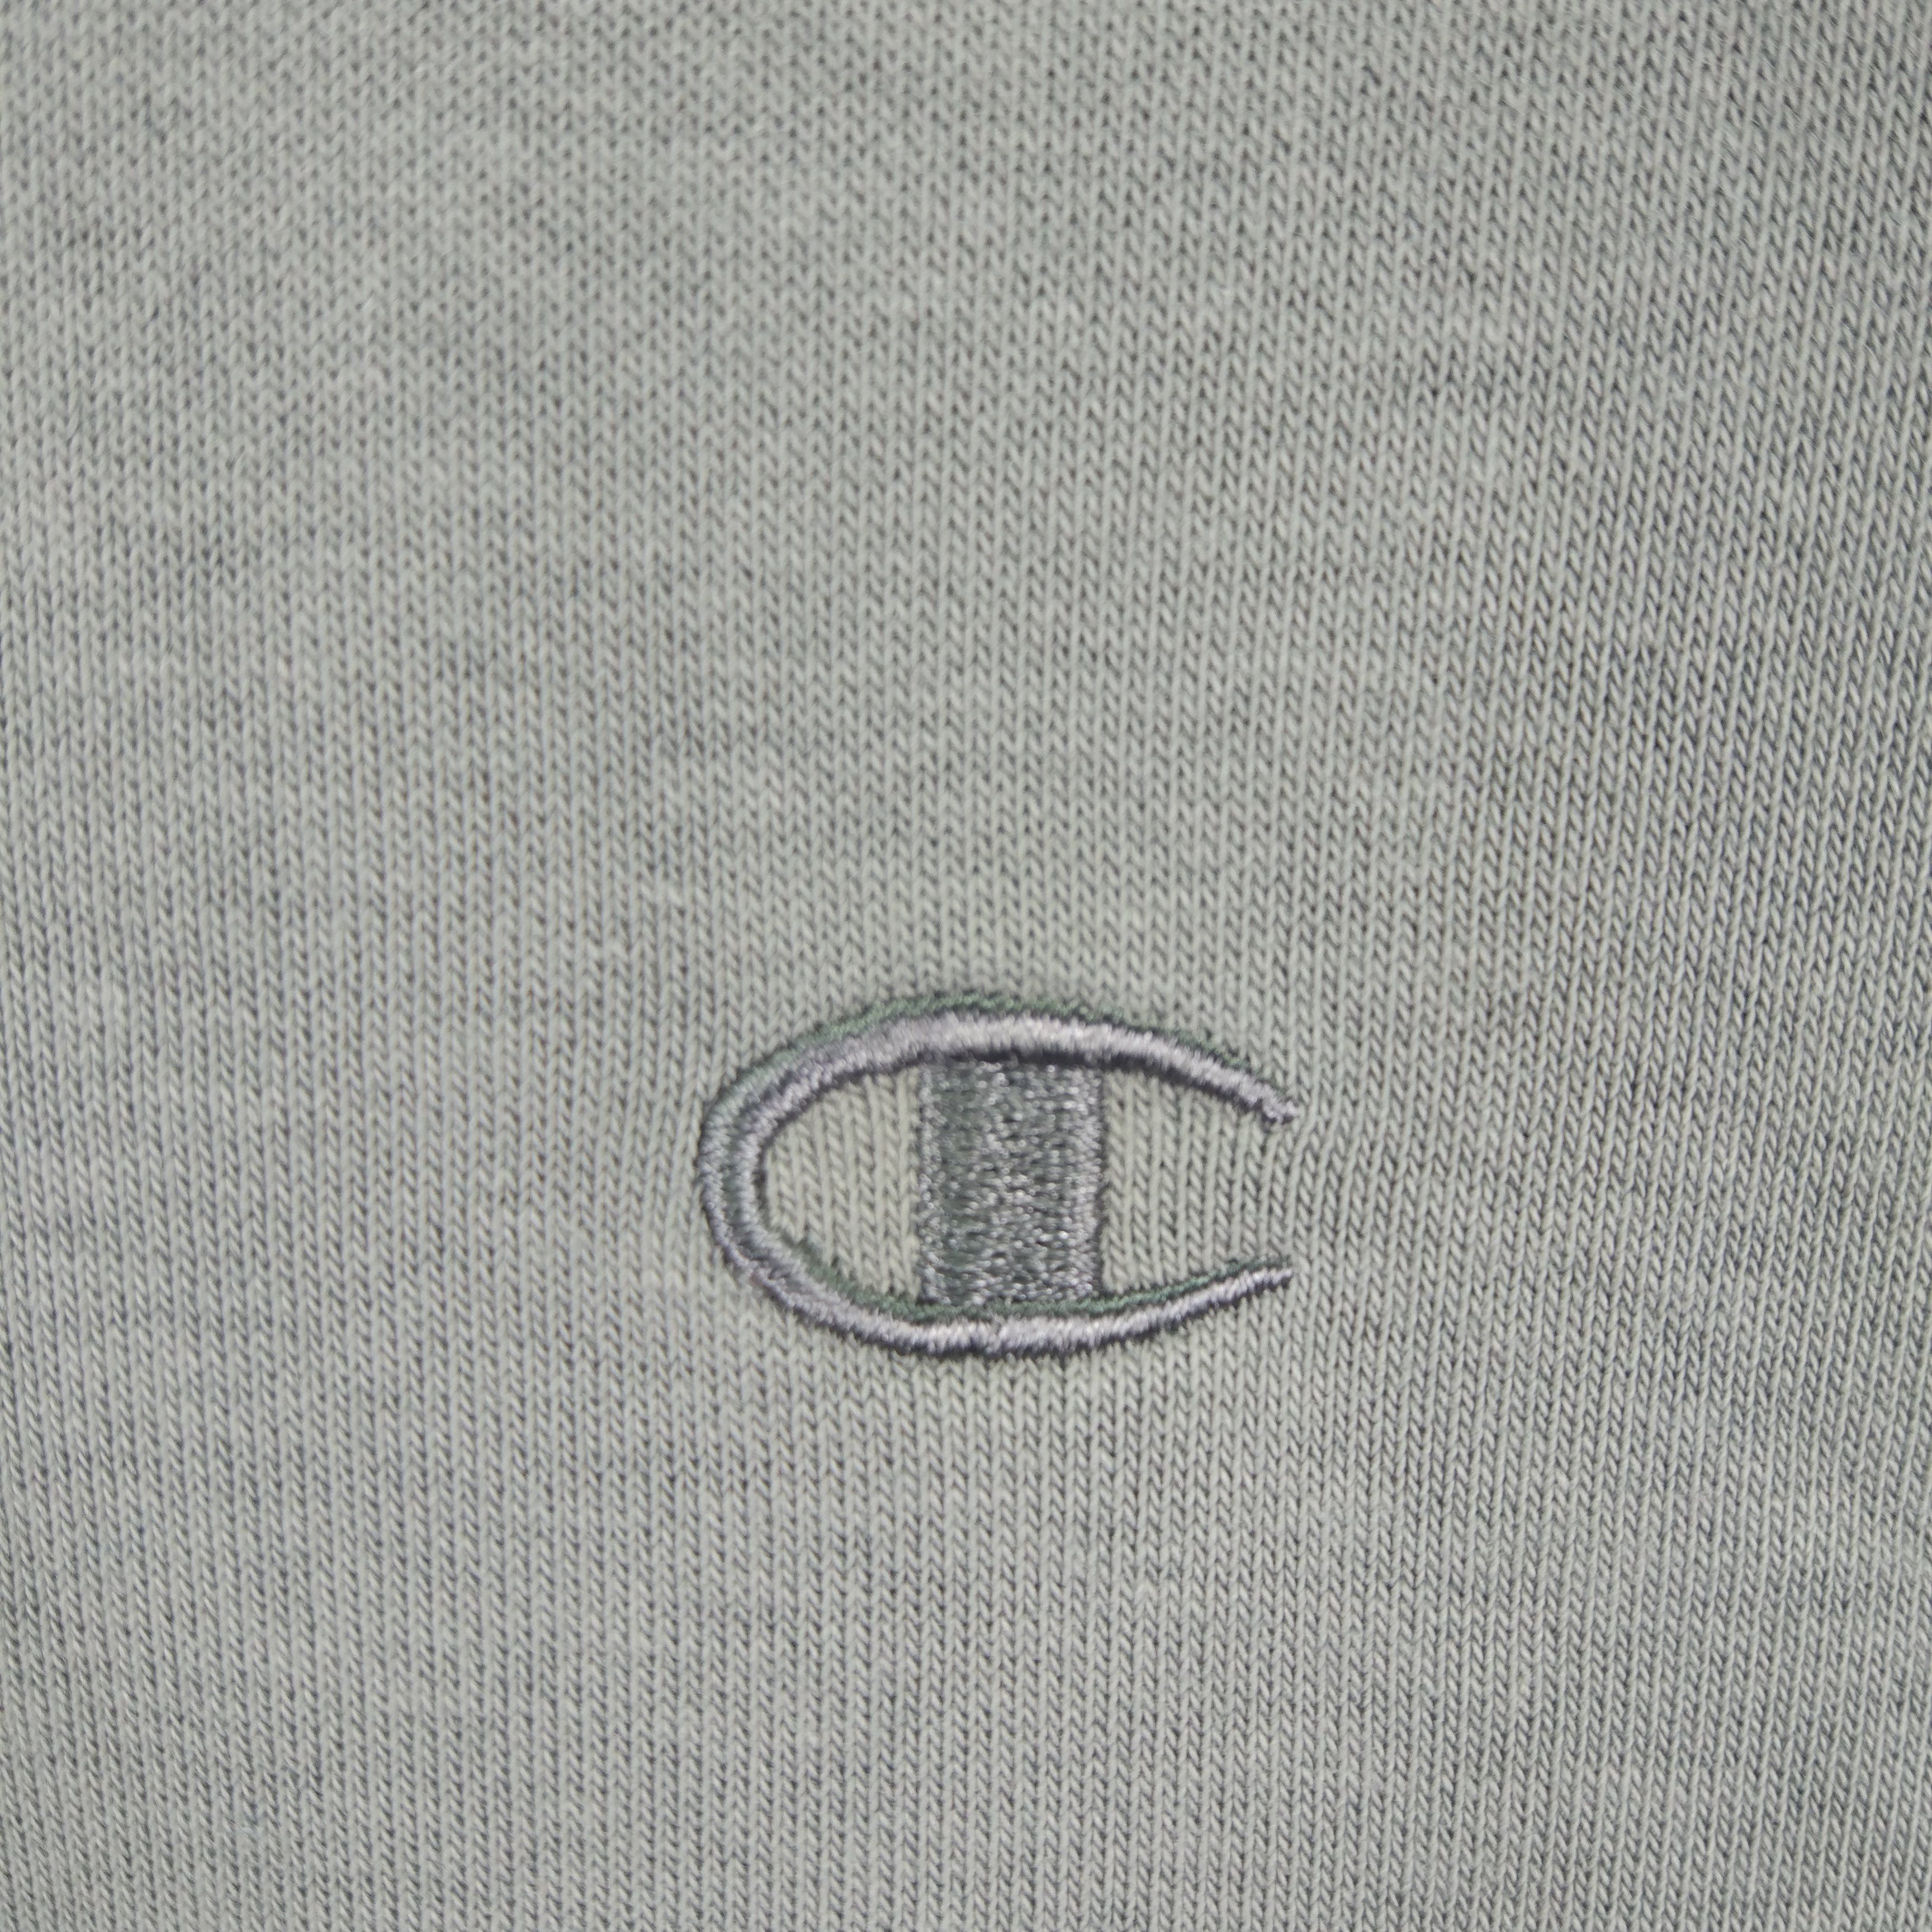 Champion Small Logo Embroidered Crewneck Pullover Jumper Sweatshirt Size L - 4